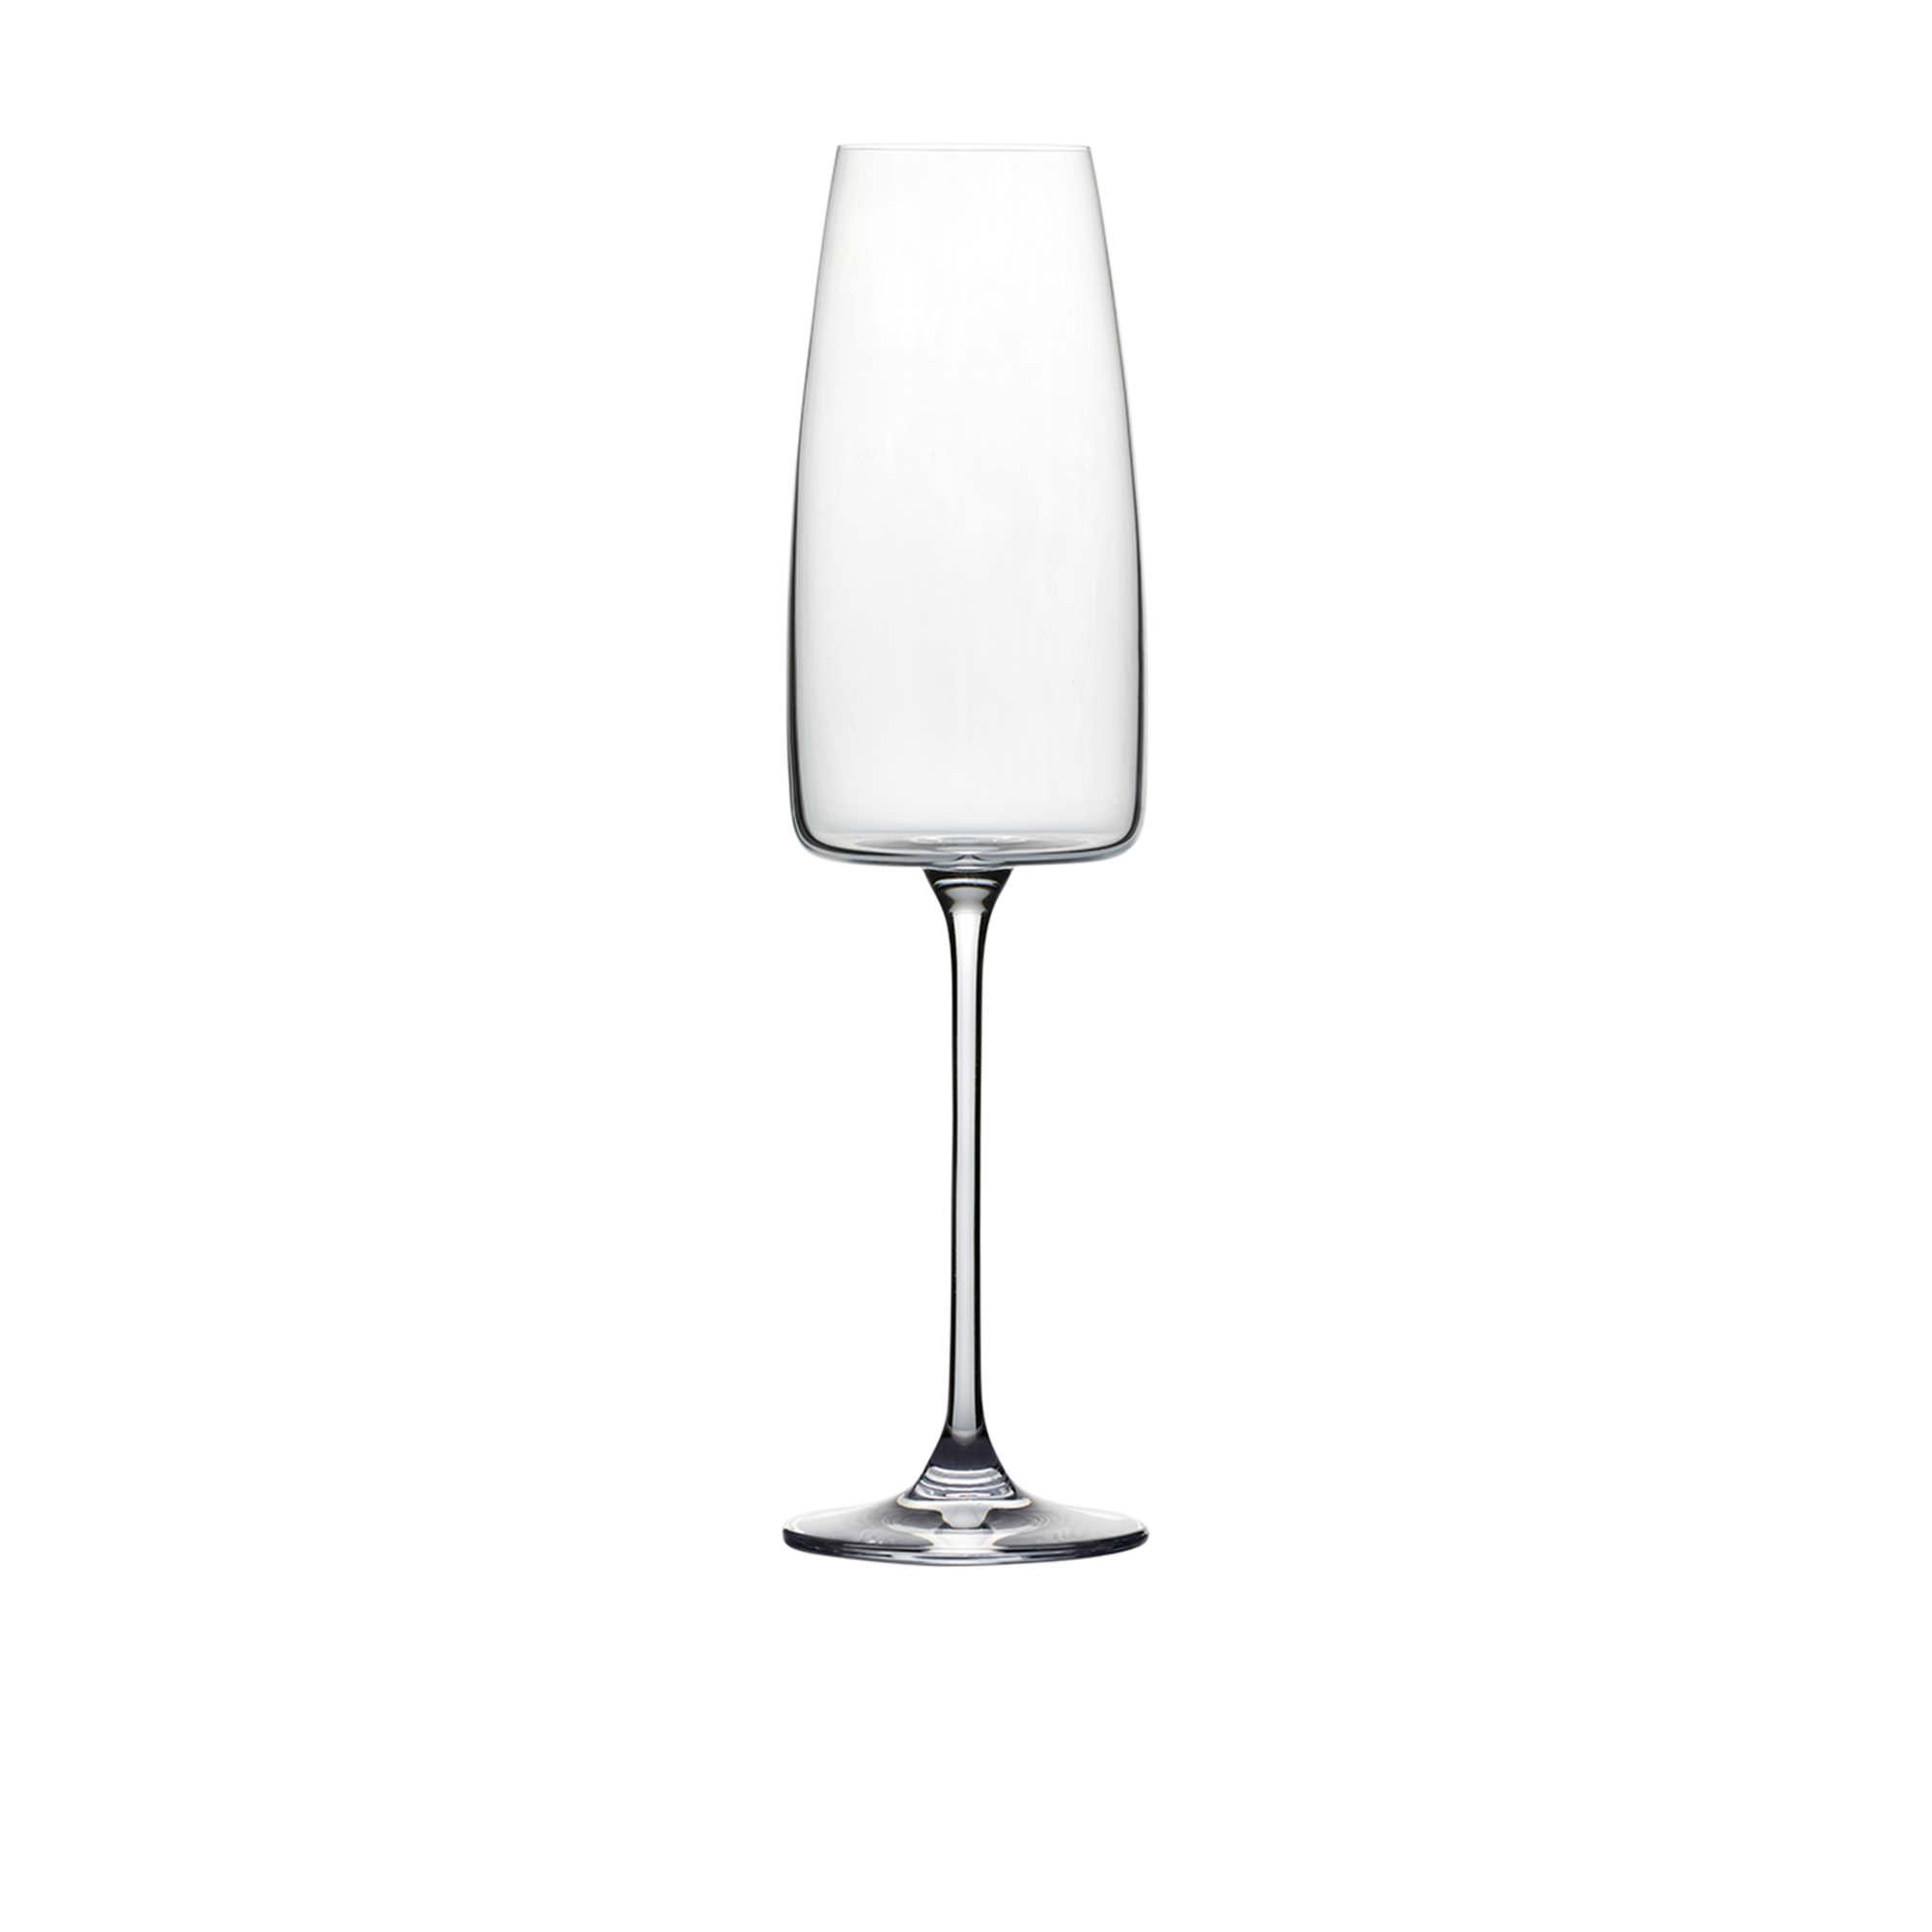 Noritake IVV Cortona Champagne Flute Glass 340ml Set of 6 Image 2